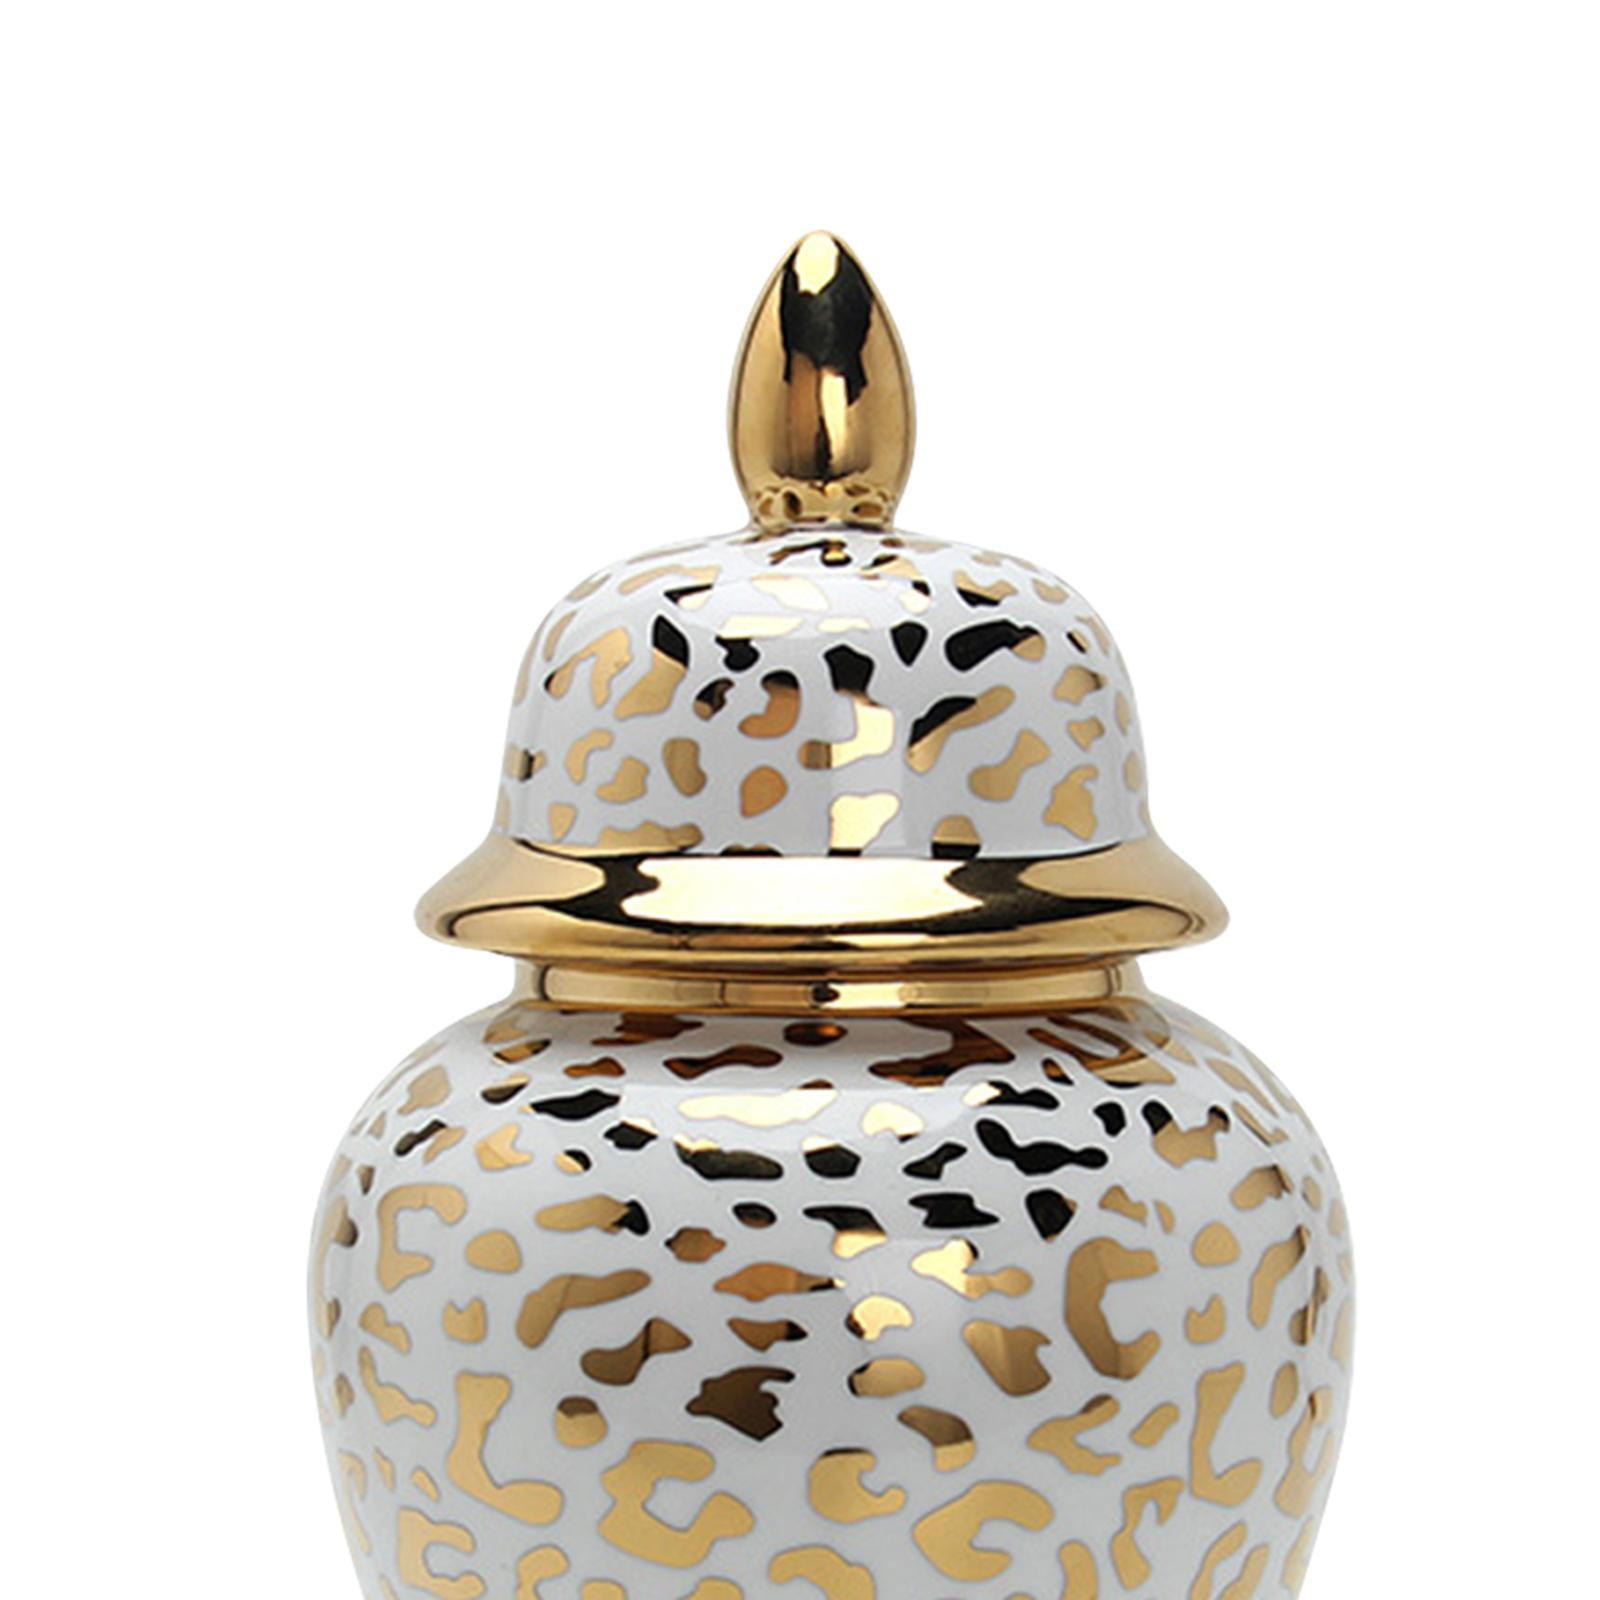 Gold shabby chic mason jars – The Vintage Artistry